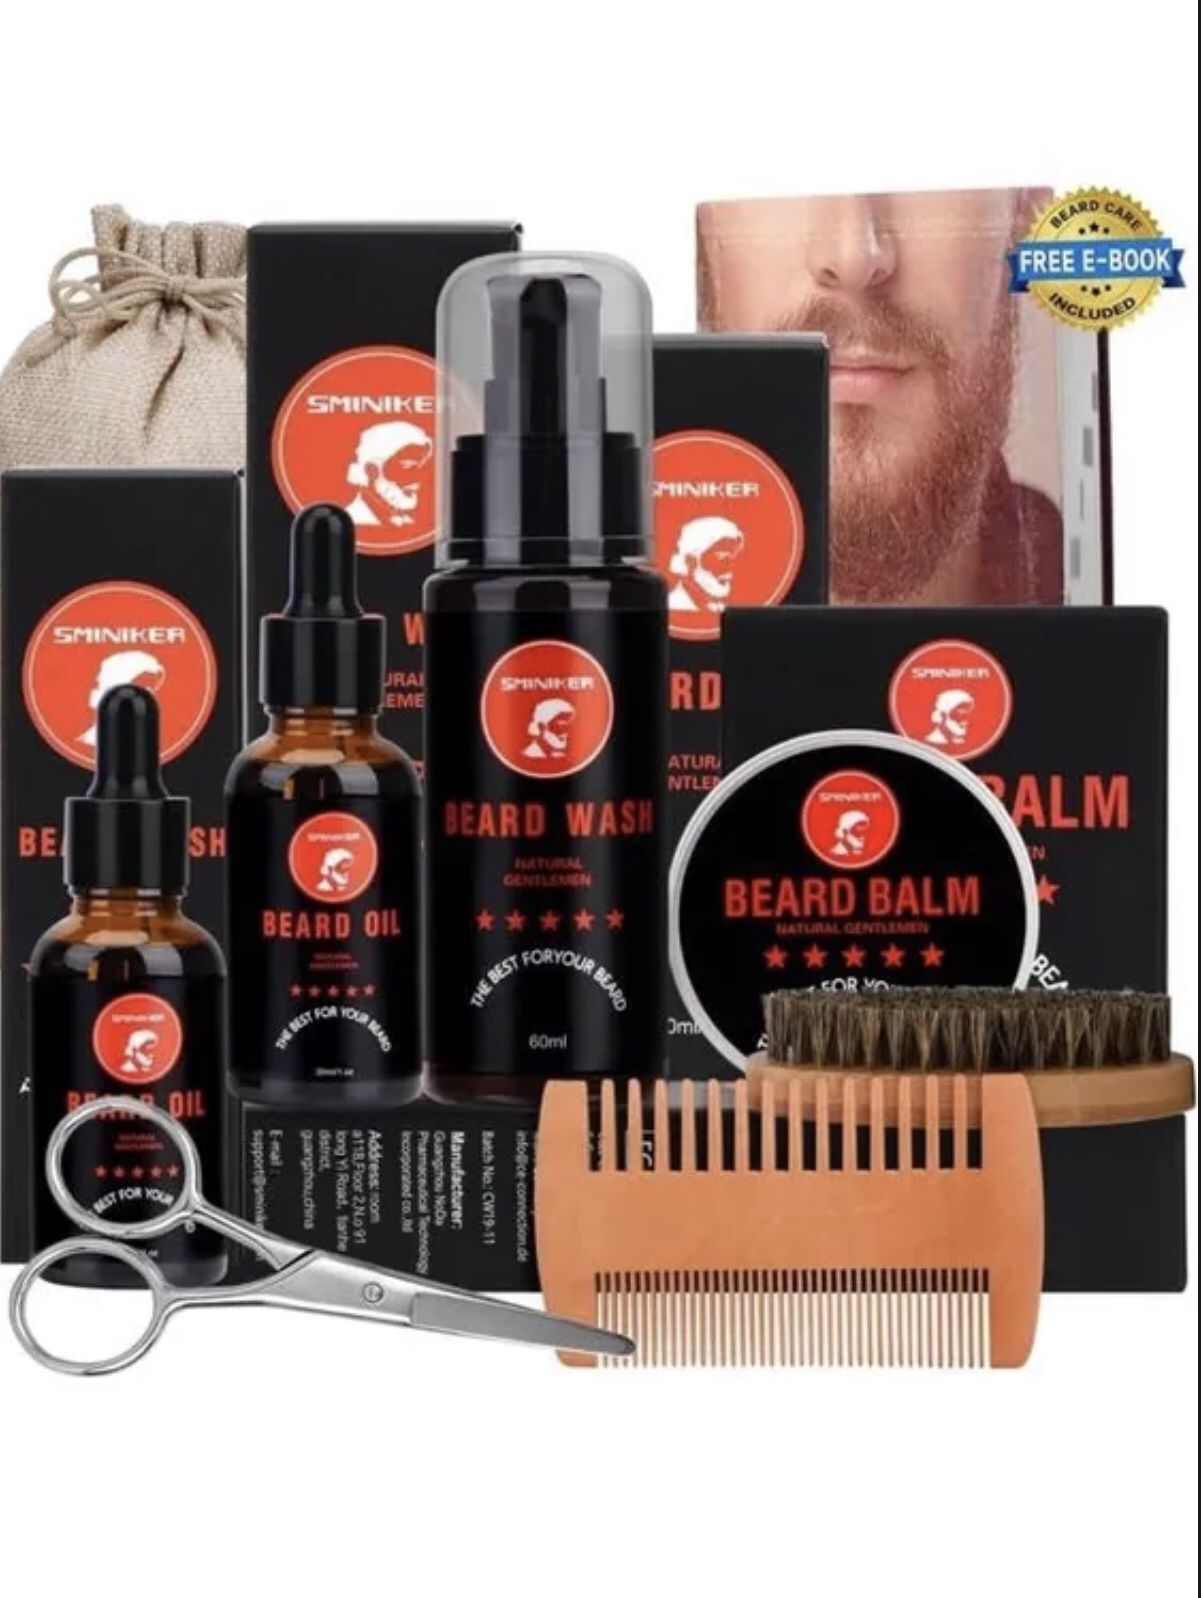 Beard Growth Kit Boosts Hair Grooms Mustache Serum Balm Brush Comb Men Care Gift